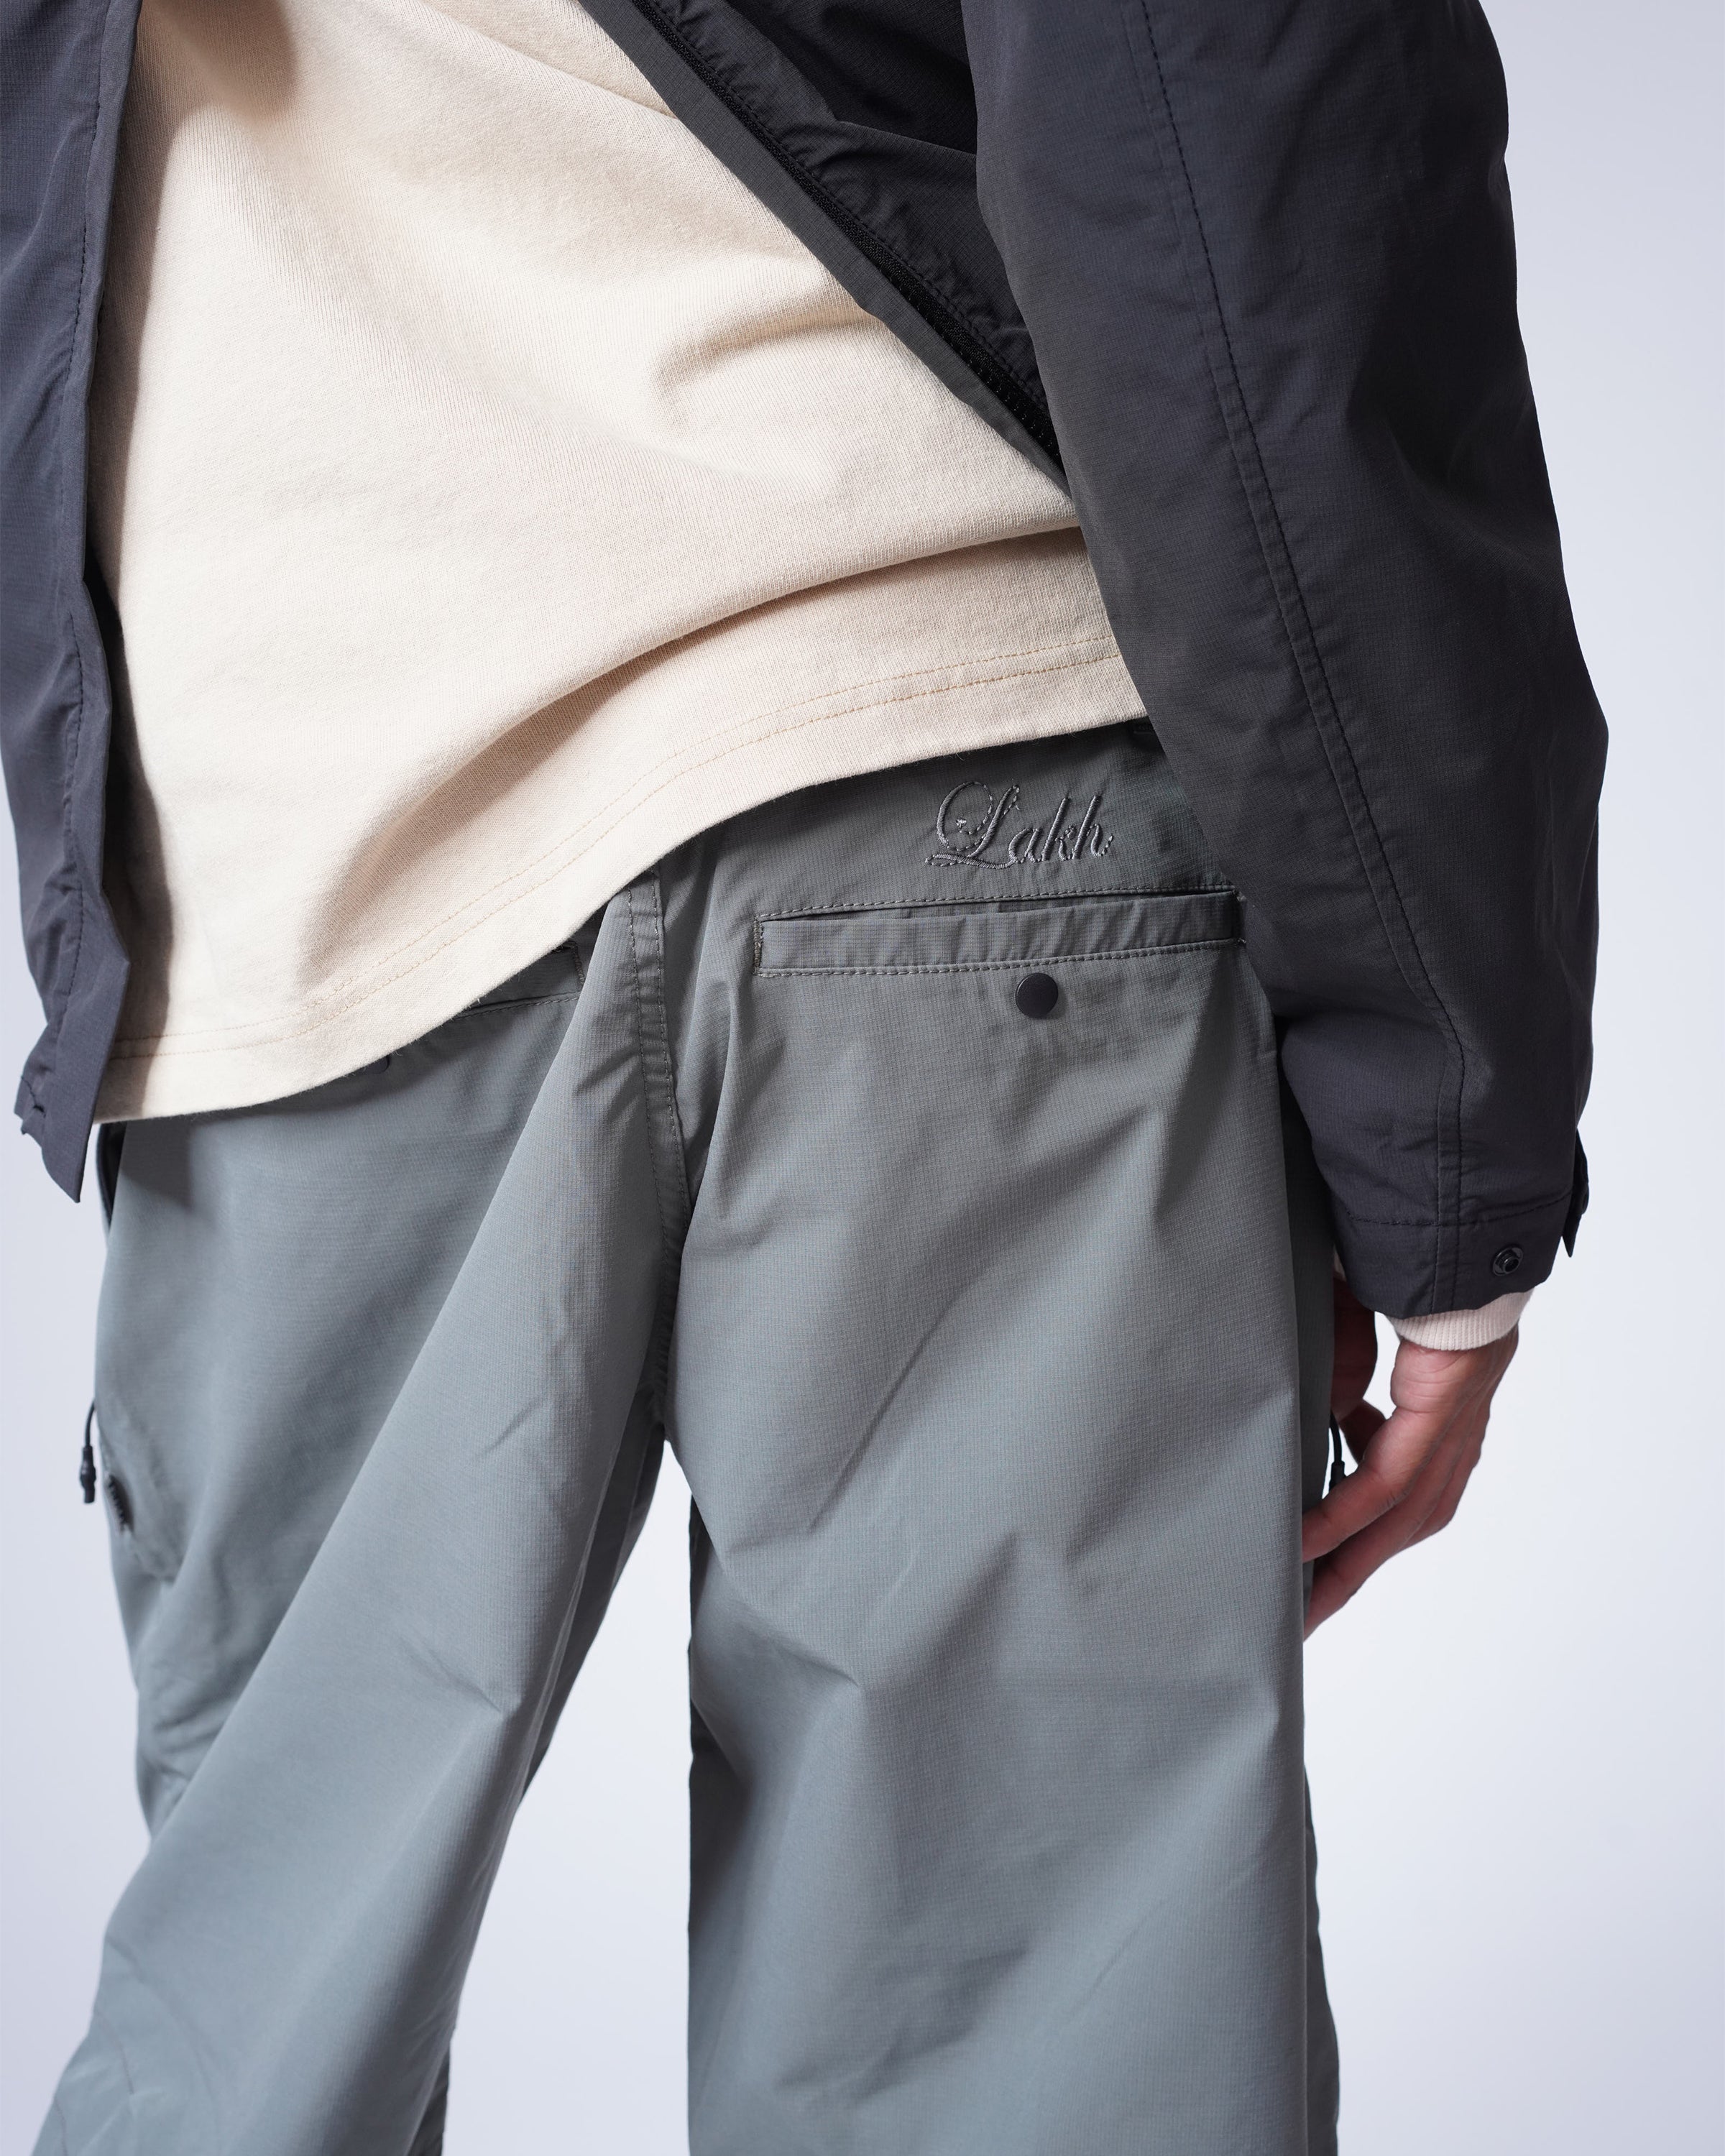 Hidden Pockets Pants - Grey